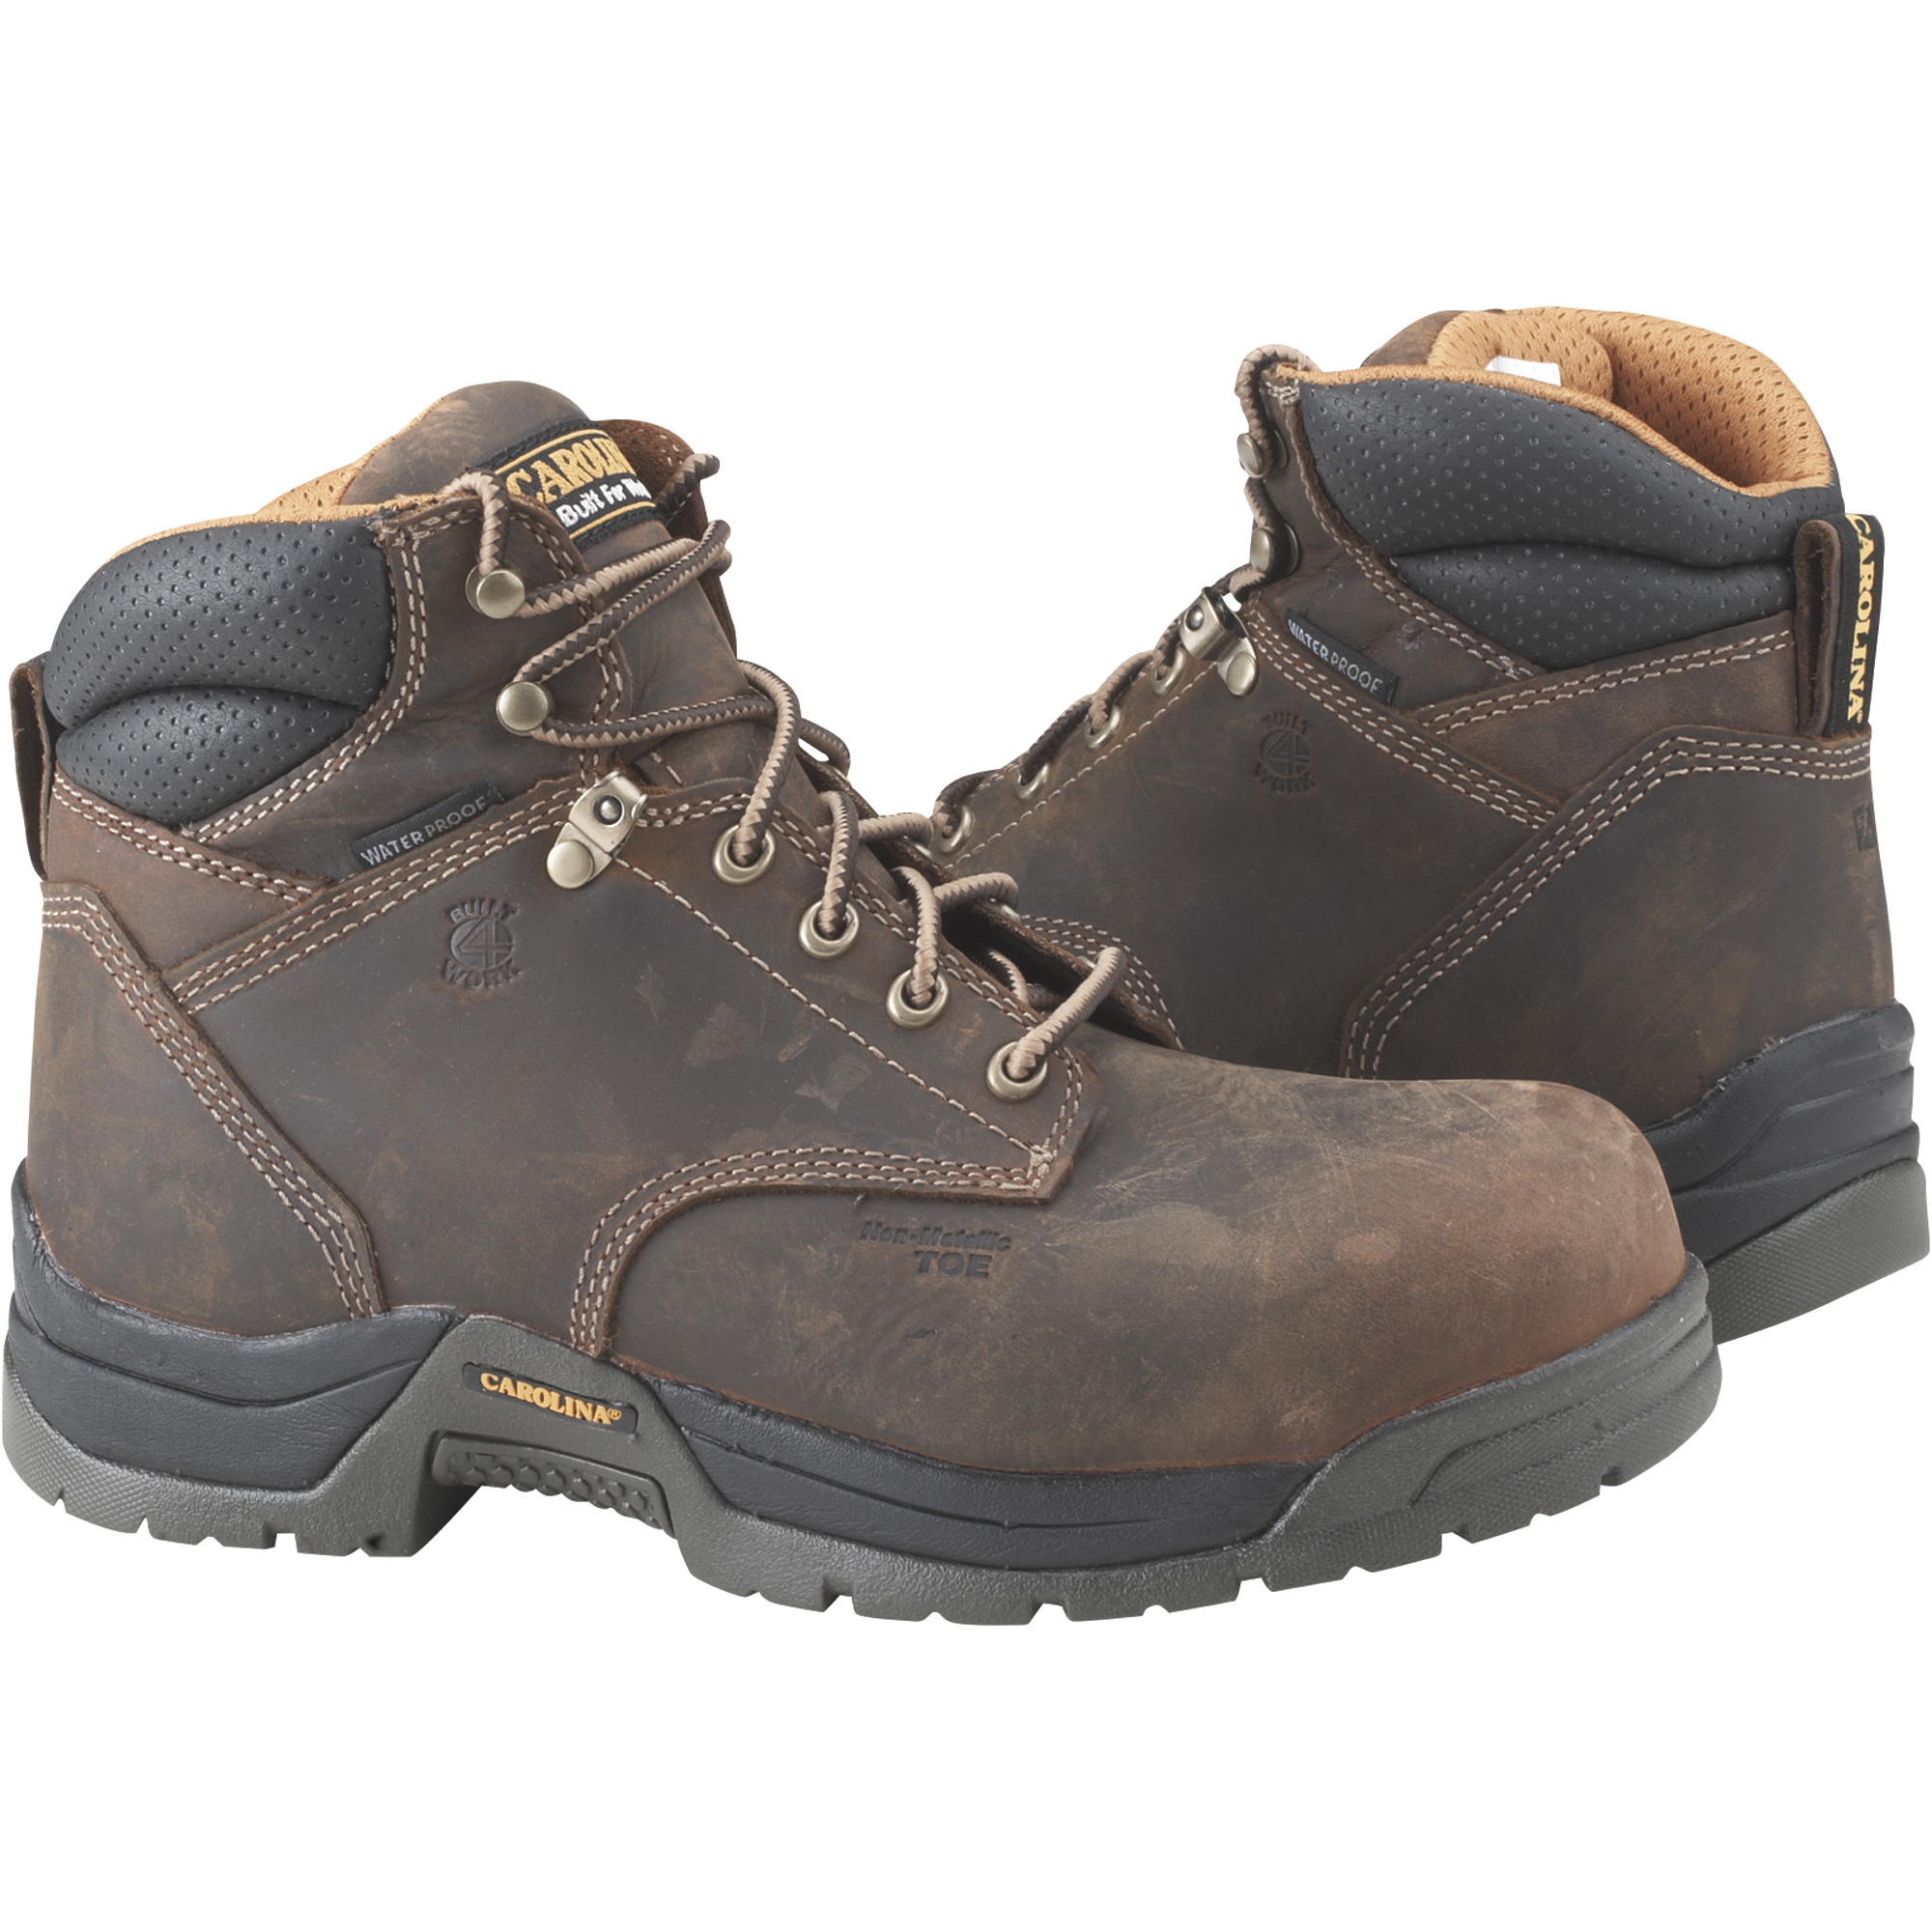 Carolina Men's 6Inch Waterproof Safety Toe Work Boots â Brown, Size 8 1/2, Model CA5520